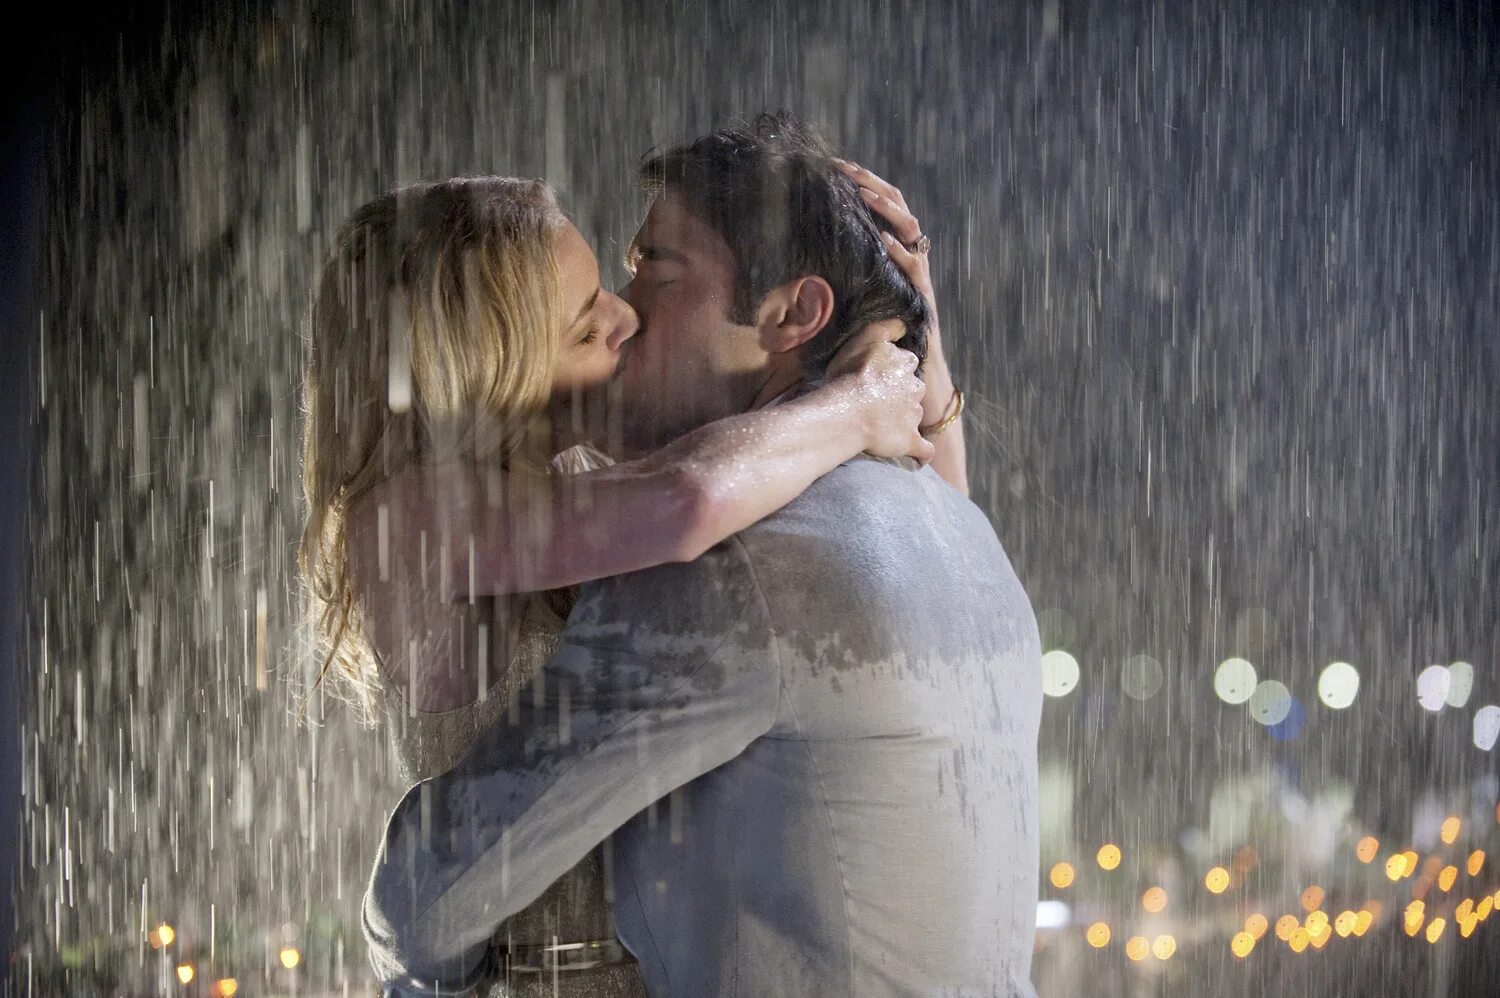 Пара под дождем. Двое под дождем. Влюбленные под дождем. Поцелуй под дождем.